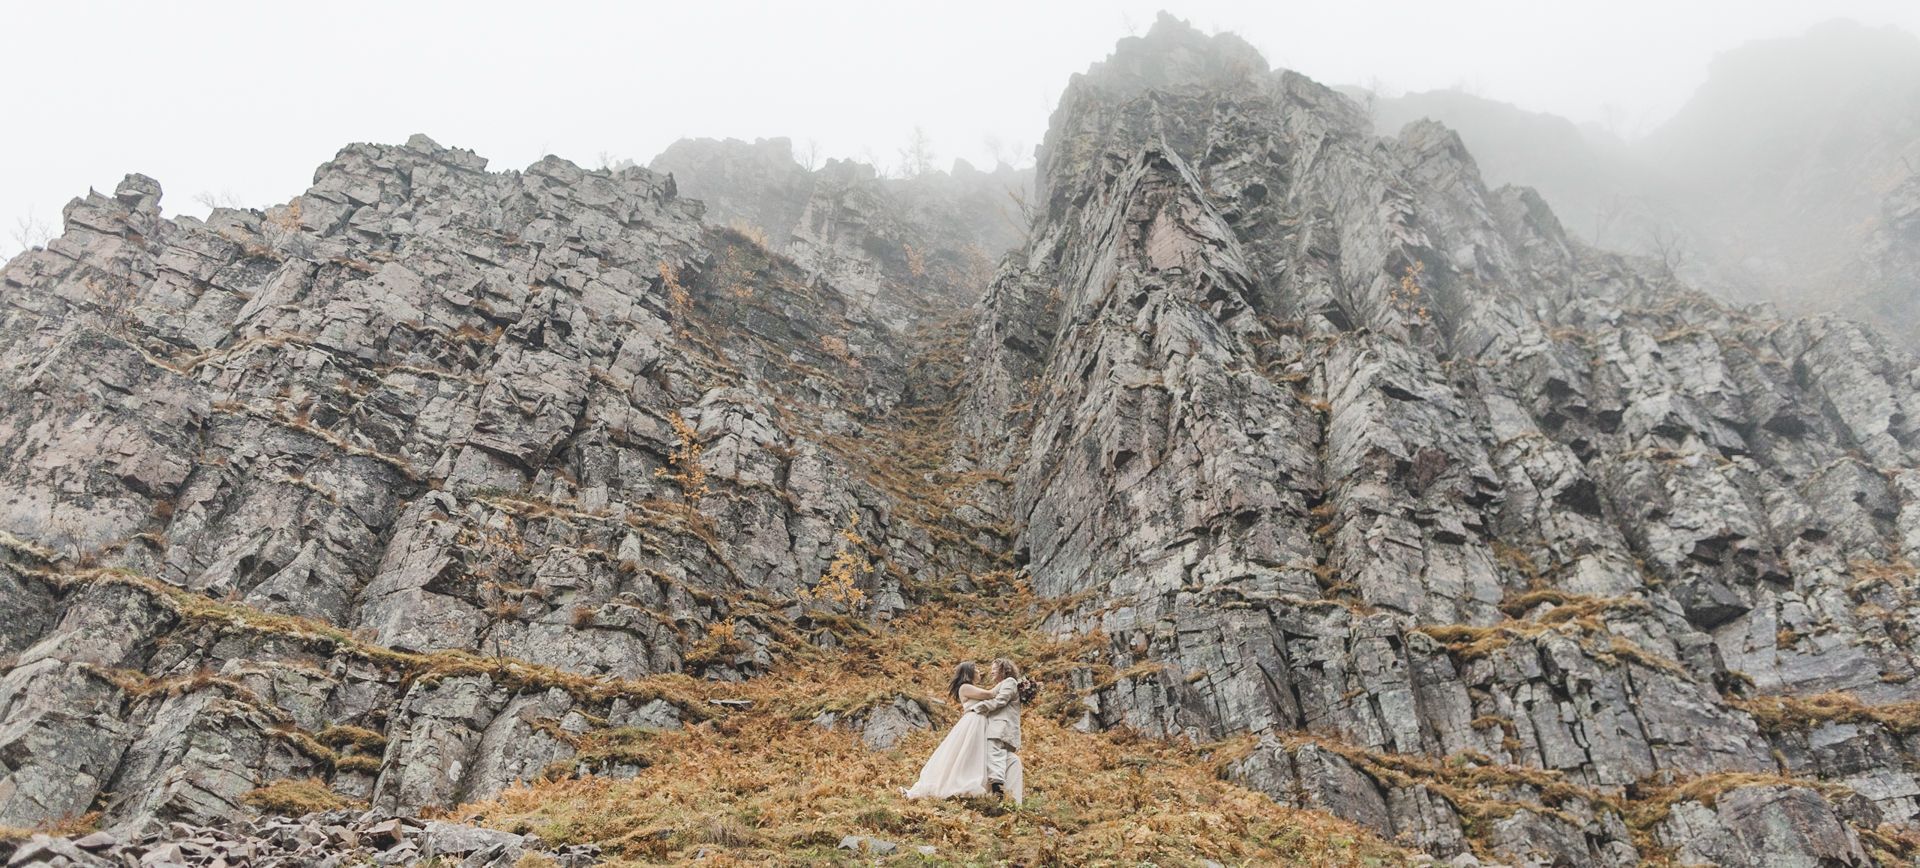 glamping elopment in sweden - elope to fulufjället national park